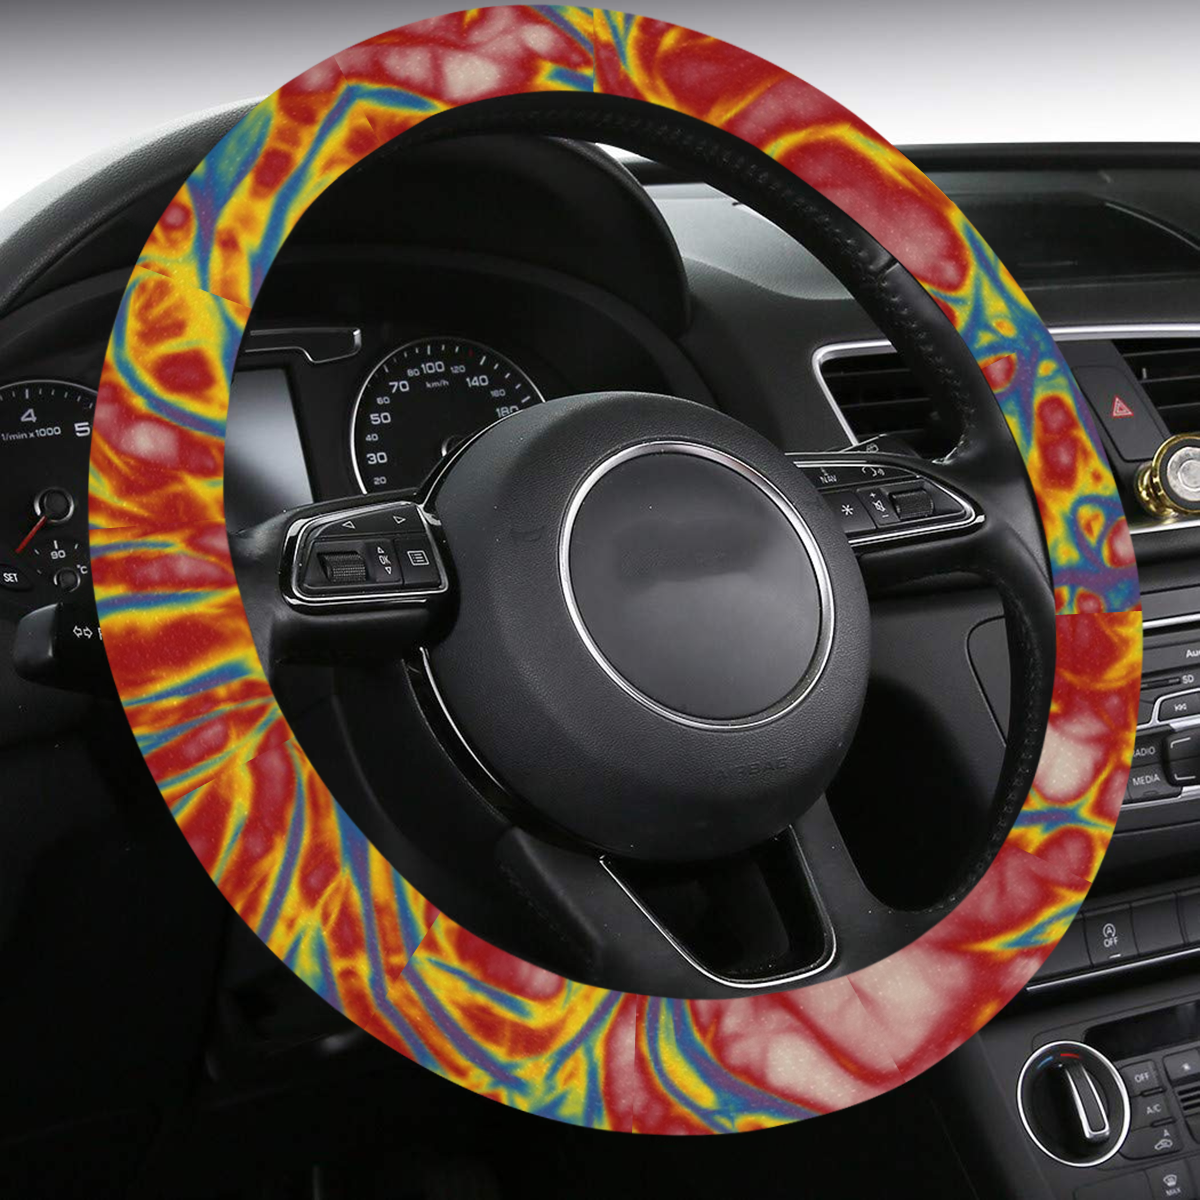 Fractal Batik ART - Hippie Blue Branches Steering Wheel Cover with Anti-Slip Insert